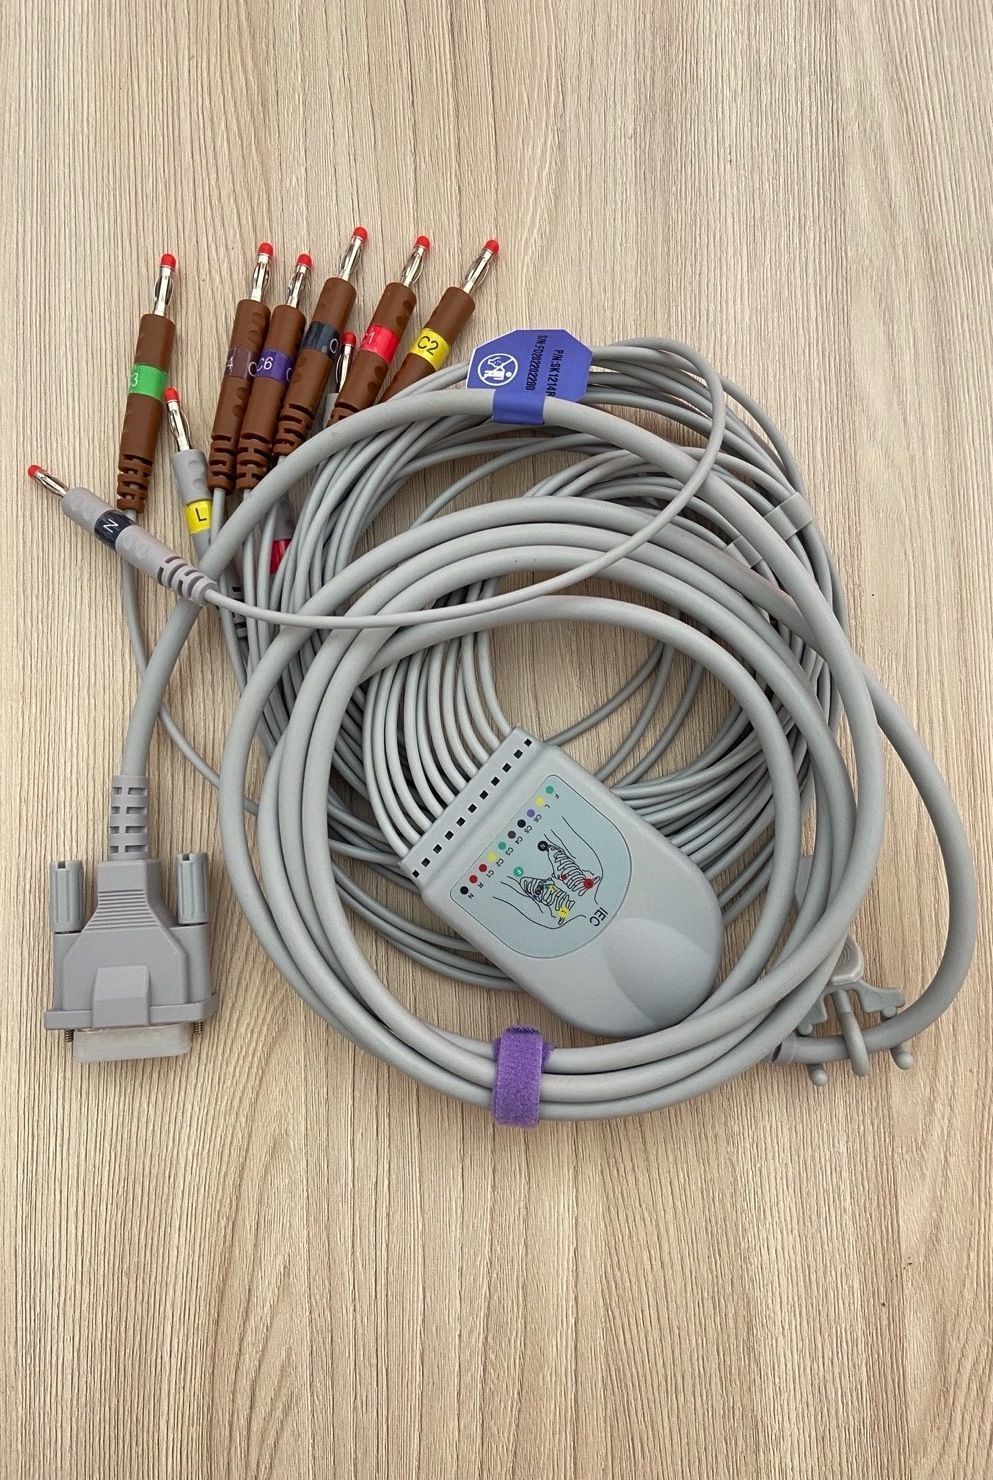 EKG cable for ECG Recorder Unit Philips Pagewriter TC10_สายอีเคจีเคเบิ้ลสำหรับเครื่องวัดอีซีจีอีเคจี ฟิลิปส์ รุ่น TC10